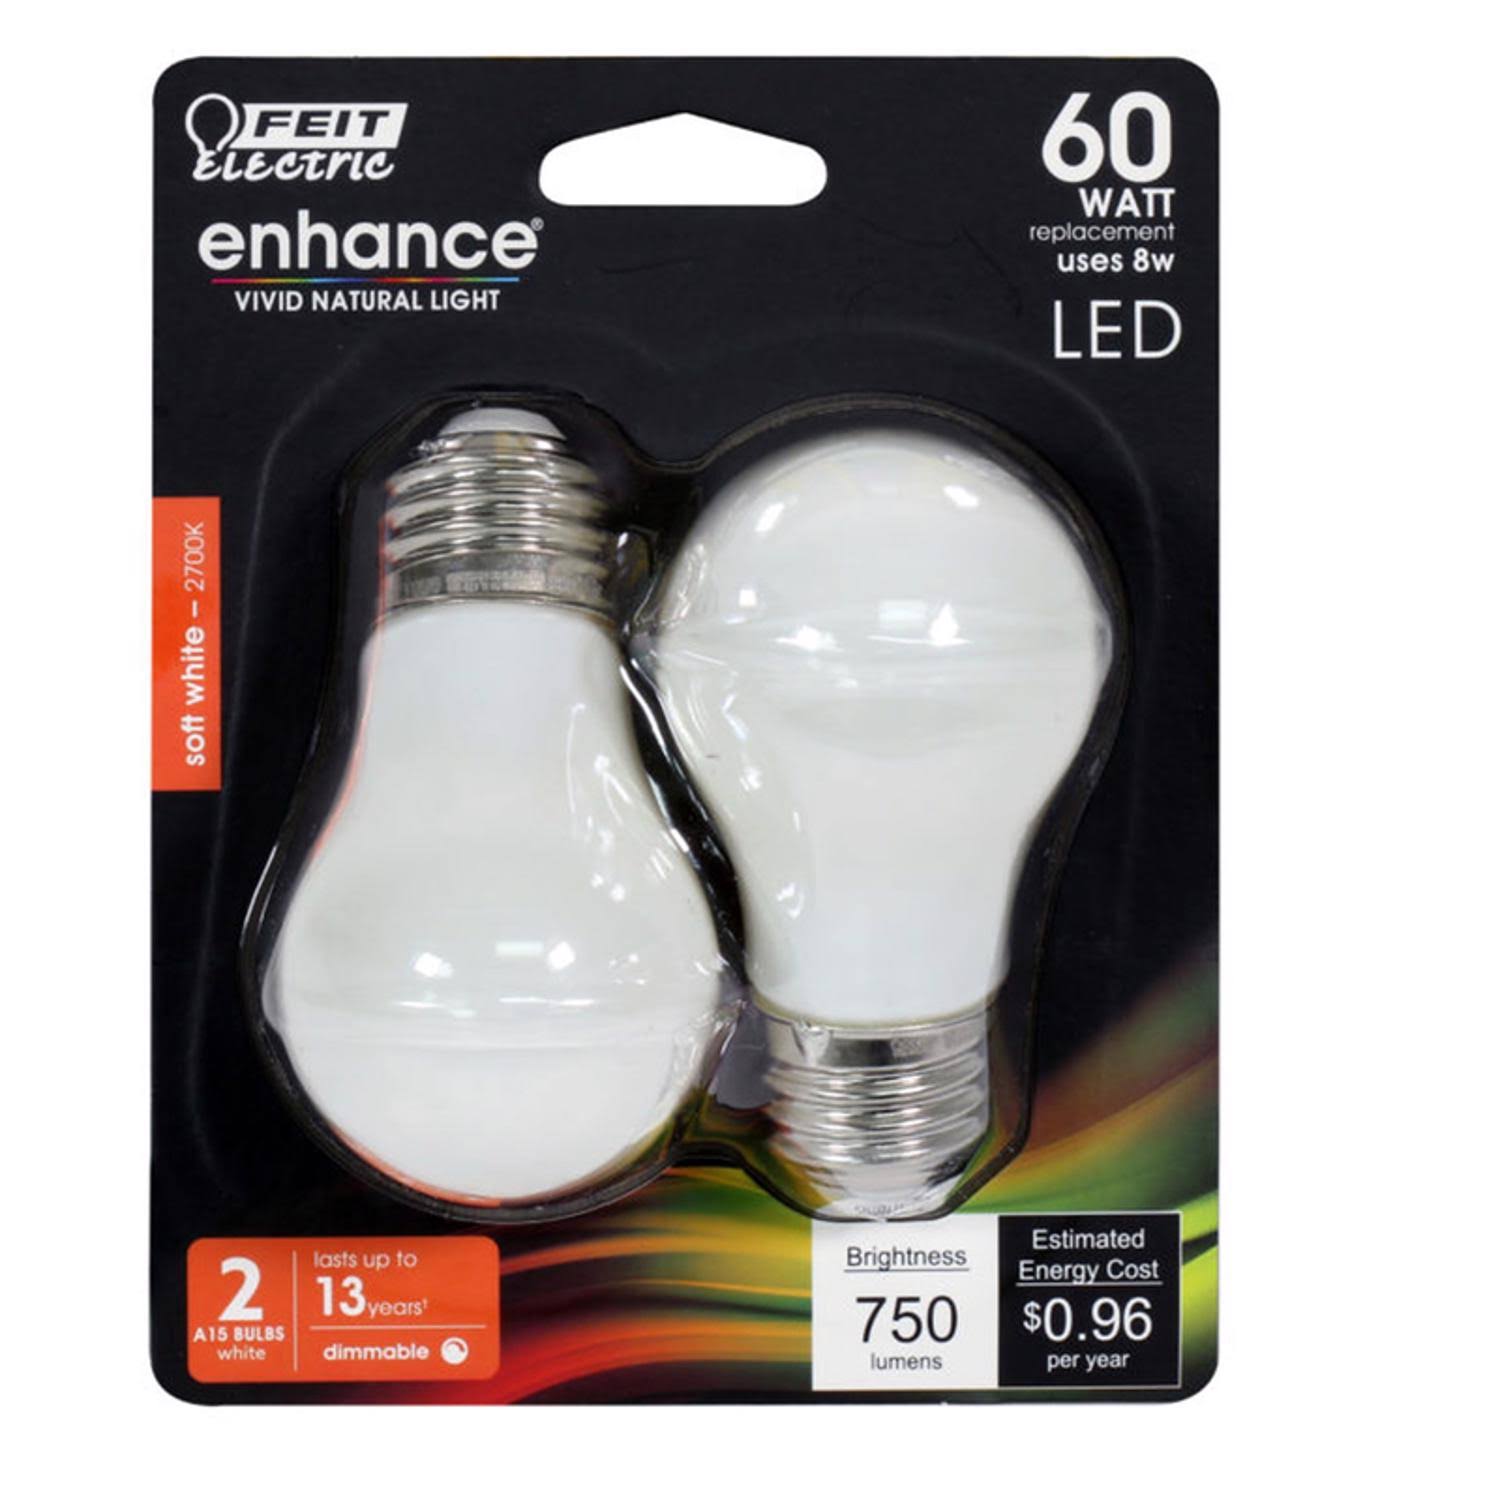 Feit Electric Enhance Light Bulb, LED, Soft White, 8 Watts - 2 bulbs